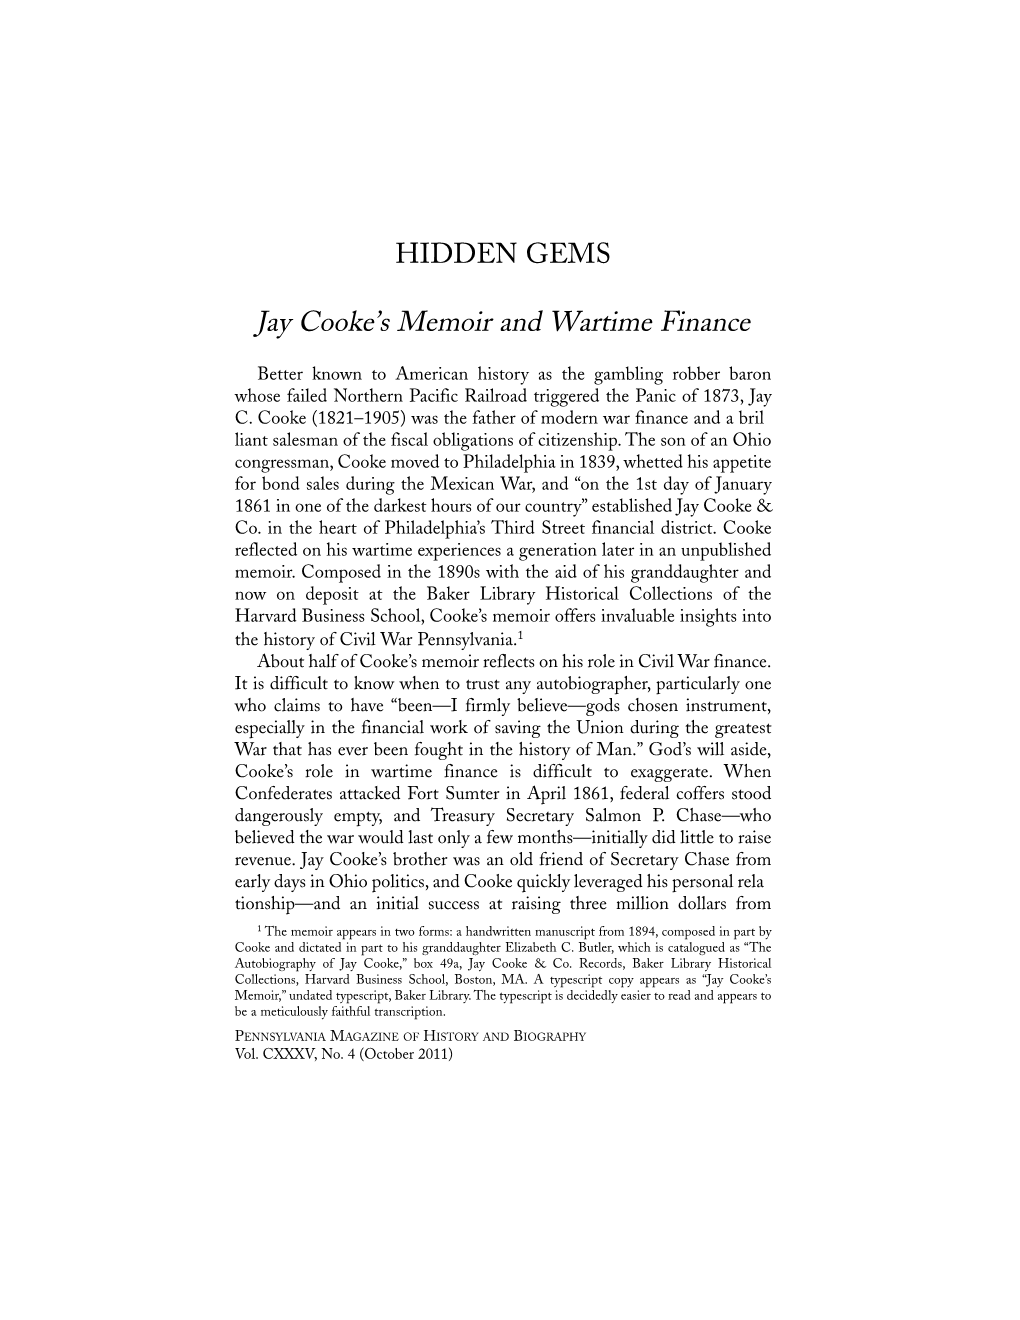 Jay Cooke's Memoir and Wartime Finanace